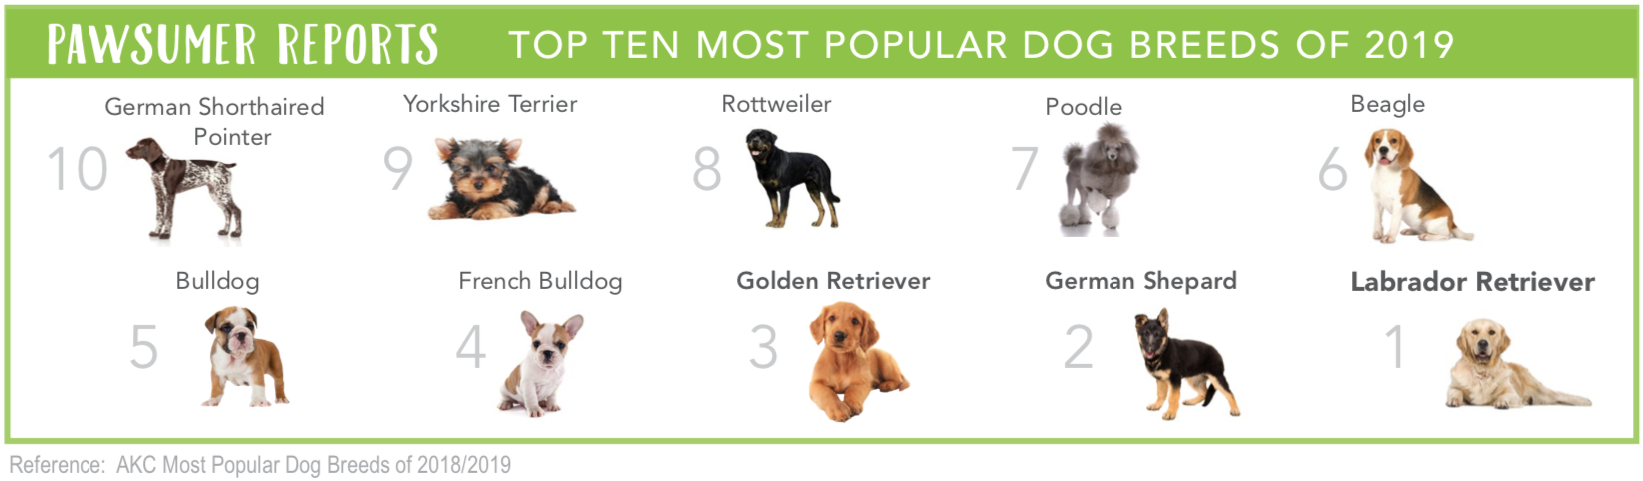 top 10 dog breeds 2019